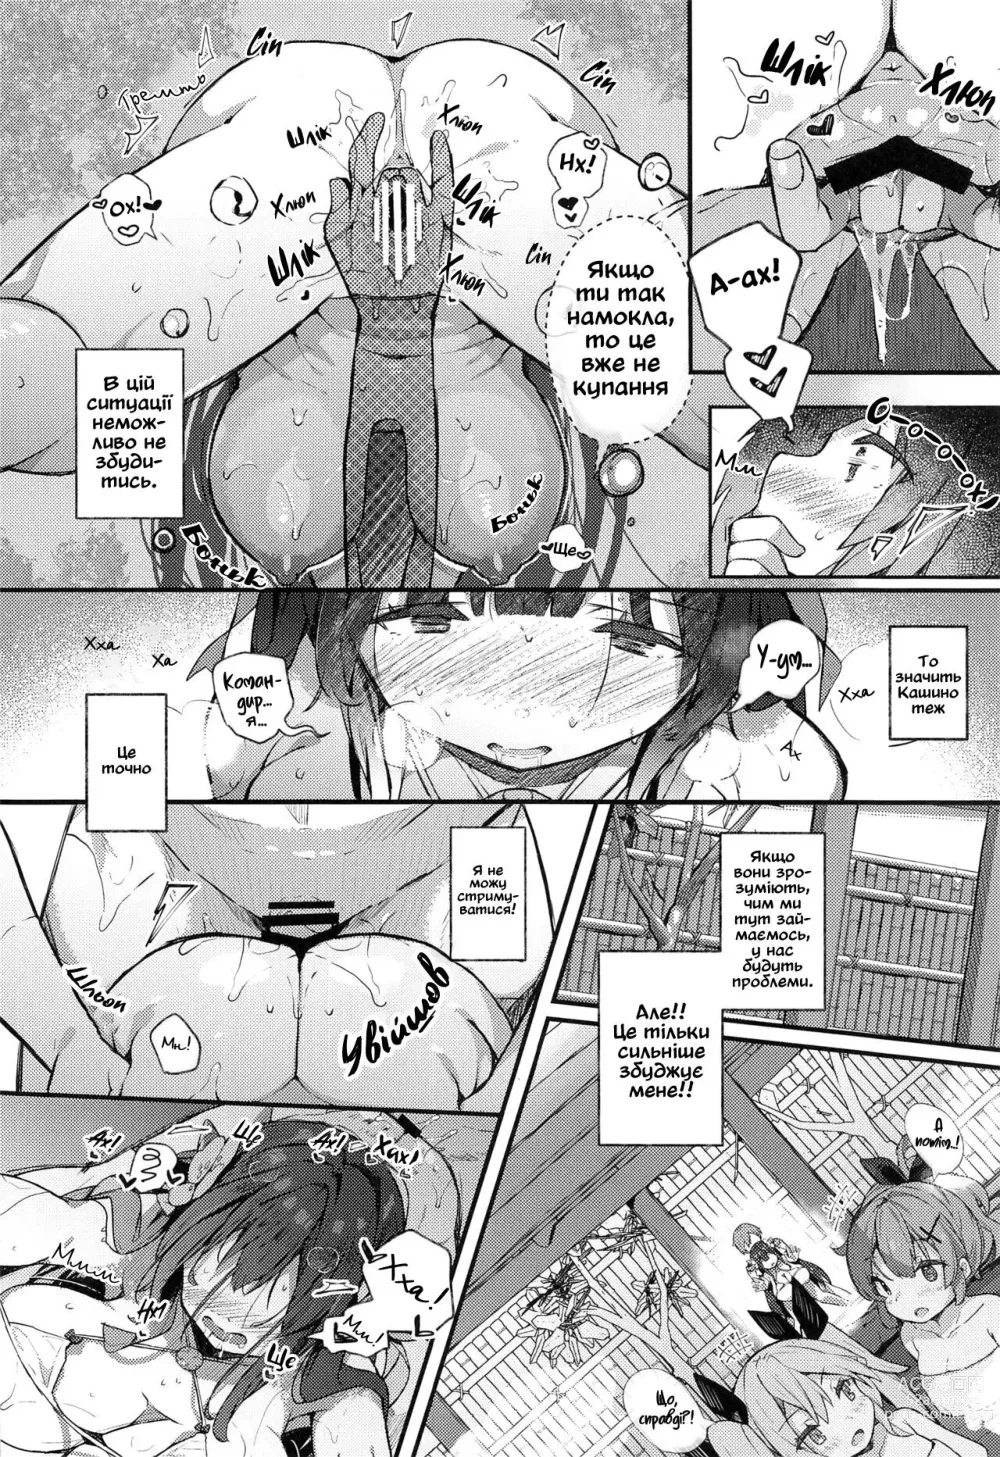 Page 6 of doujinshi На гарячих джерелах із Кашино